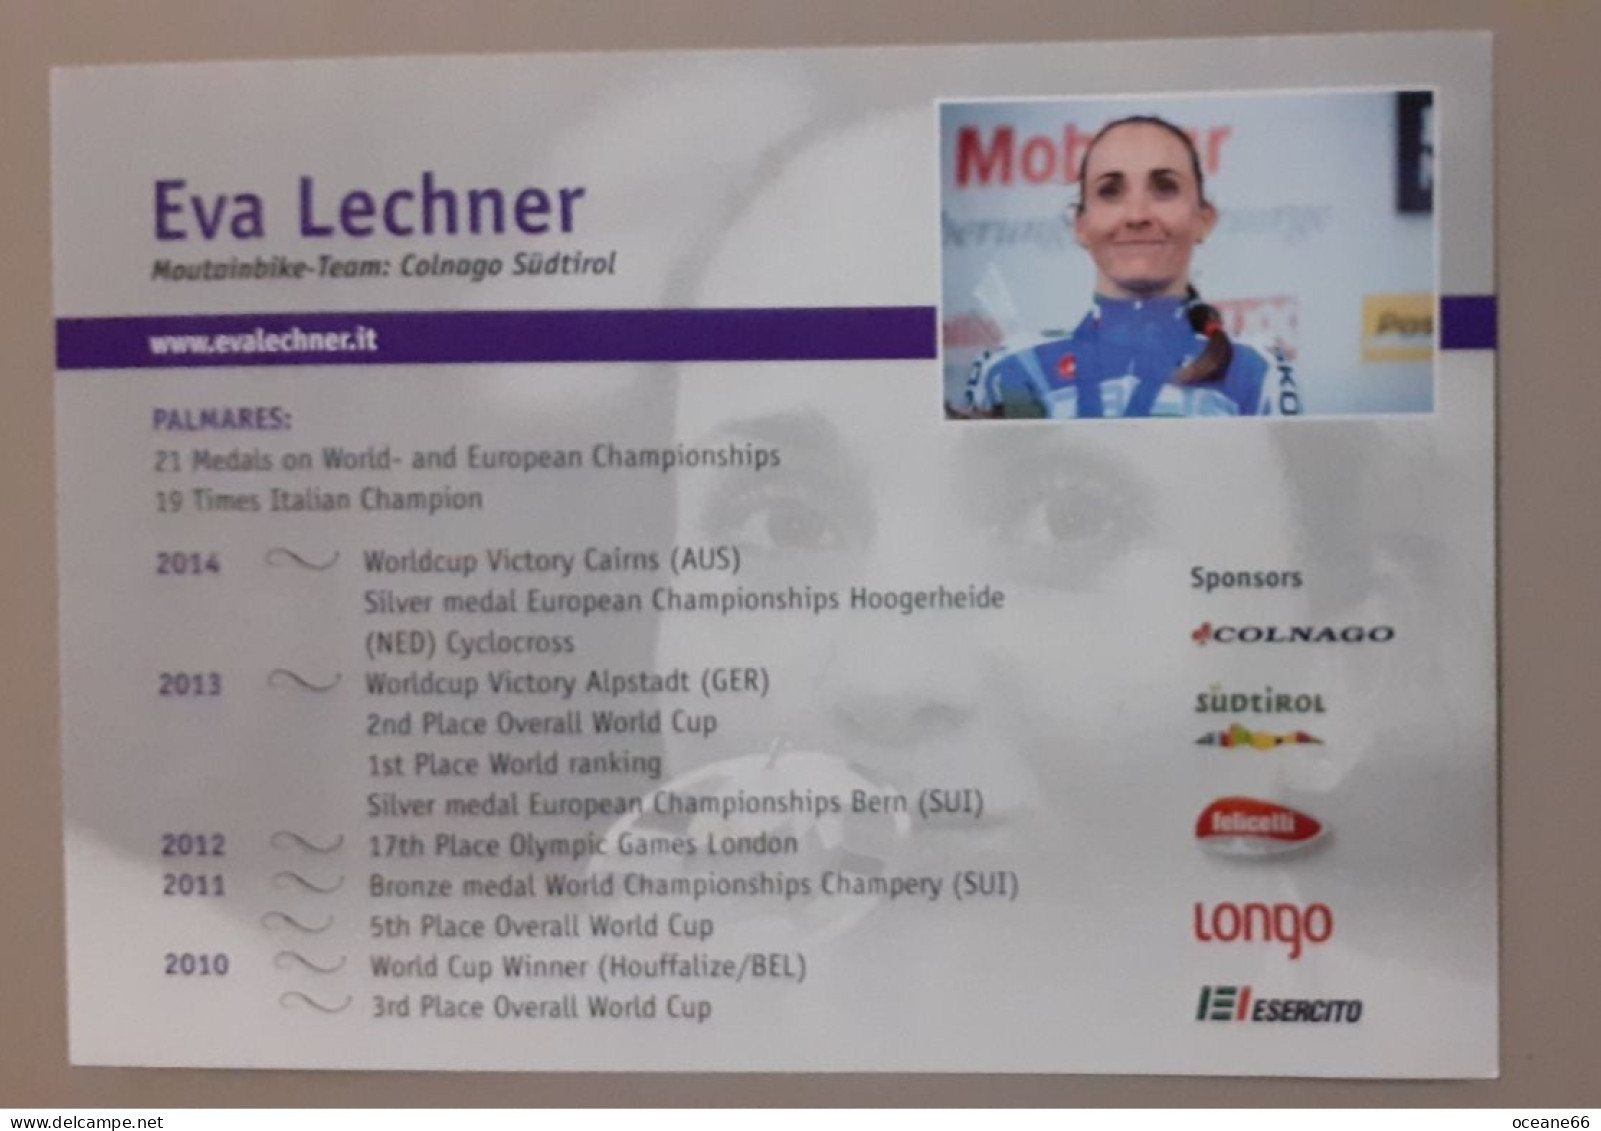 Autographe Eva Lechner Colnago Format A5ppp - Cyclisme